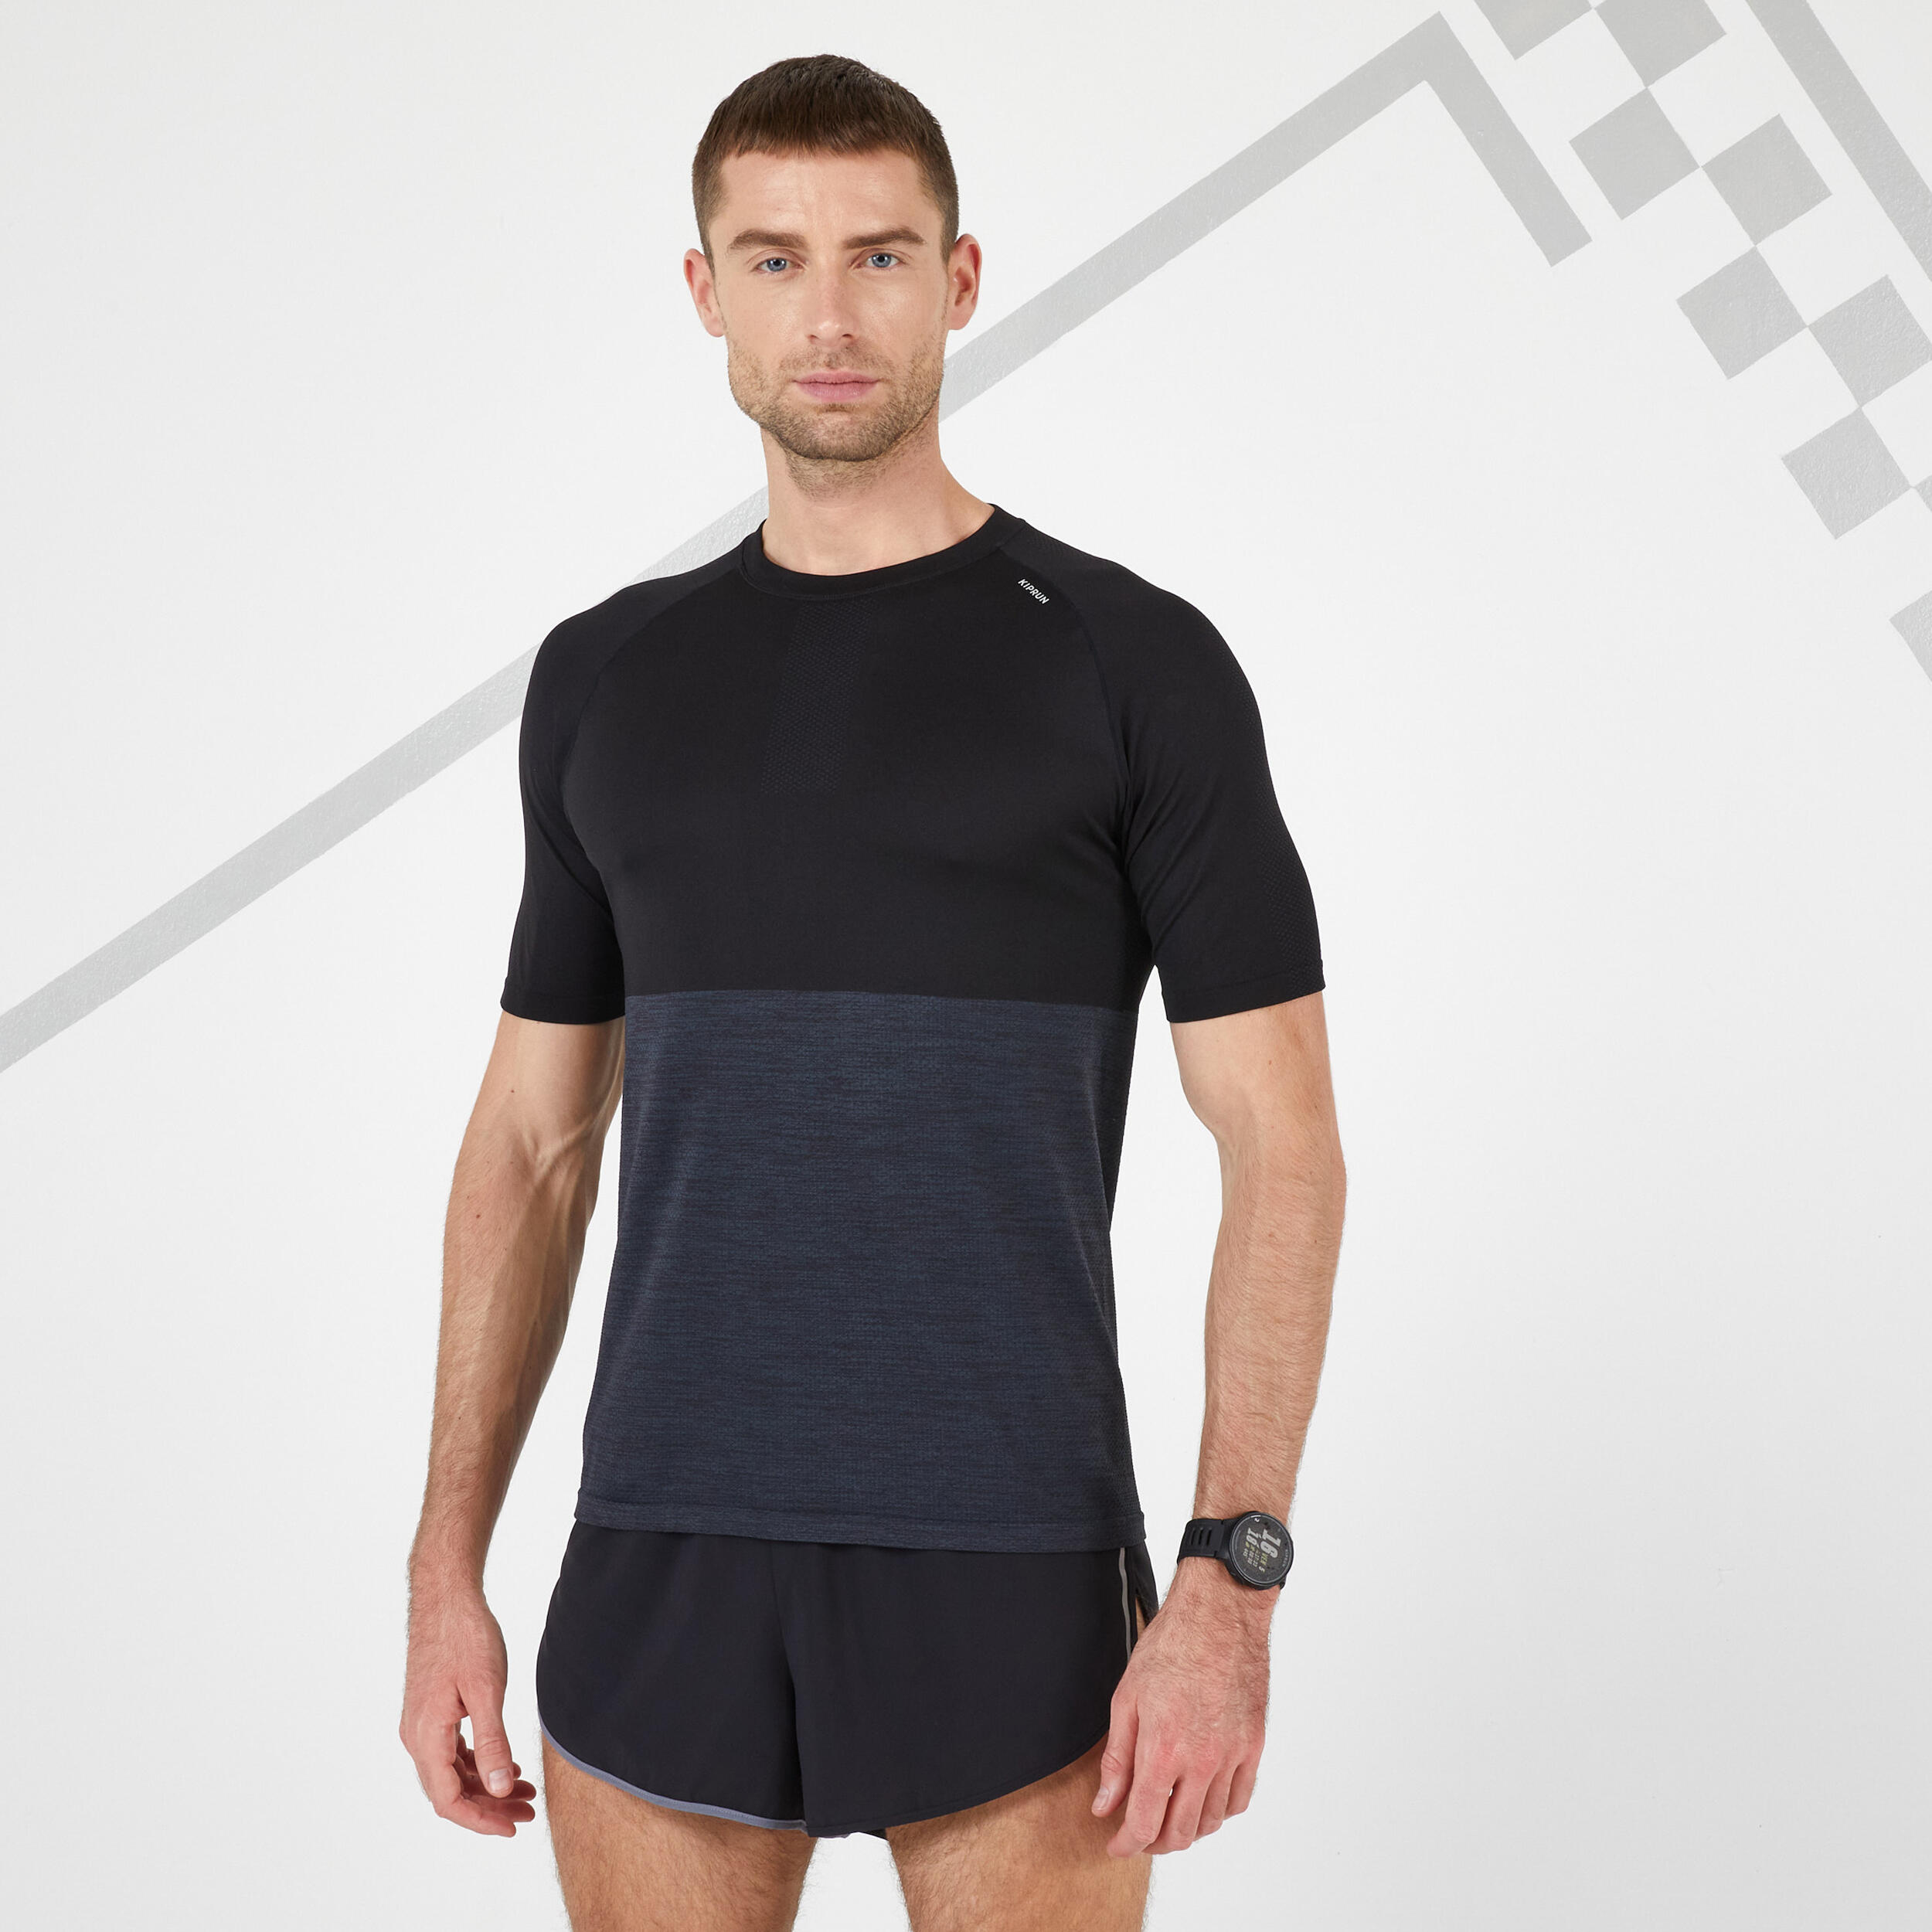 Men's Seamless Quick Dry Running T-Shirt - Black